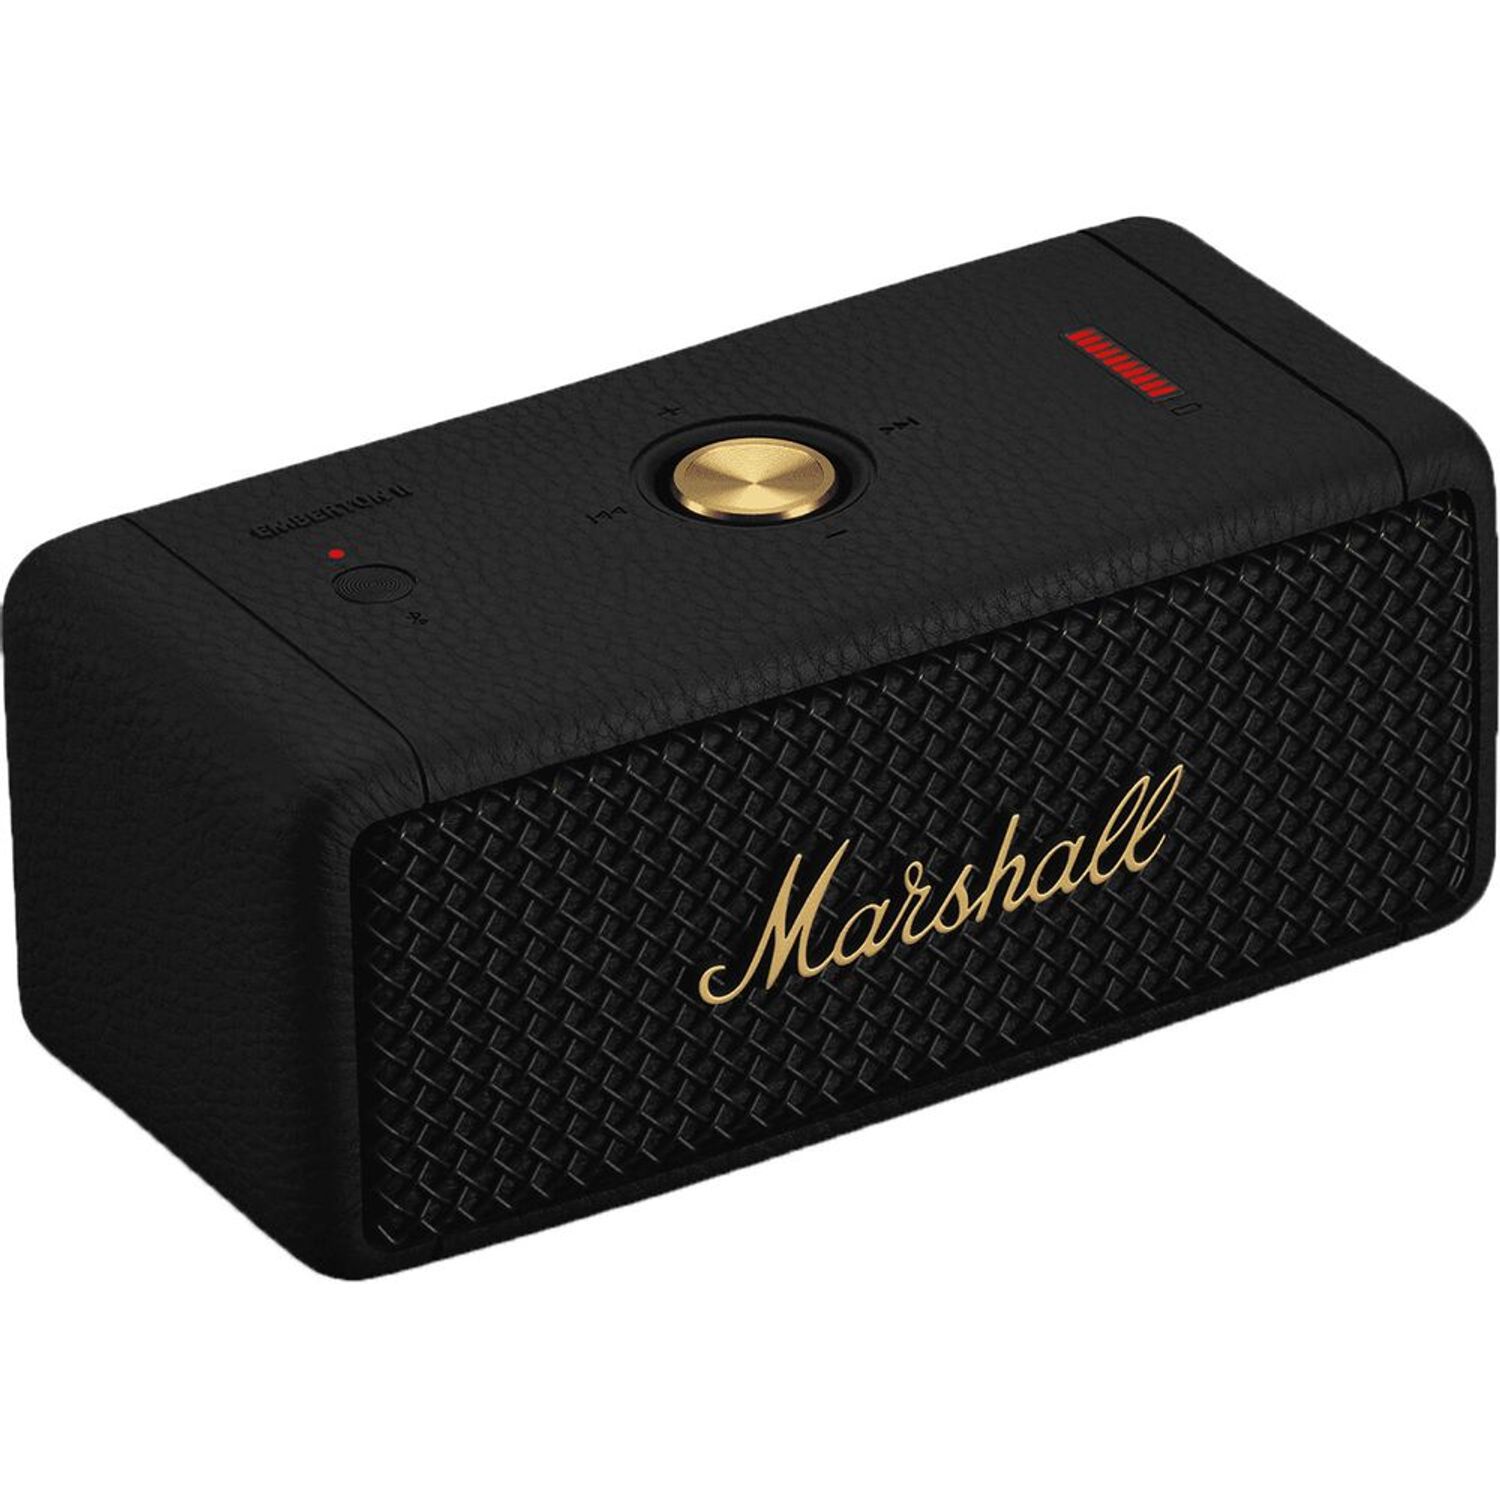  Marshall Altavoz Bluetooth inalámbrico Stanmore II, negro -  NUEVO : Electrónica